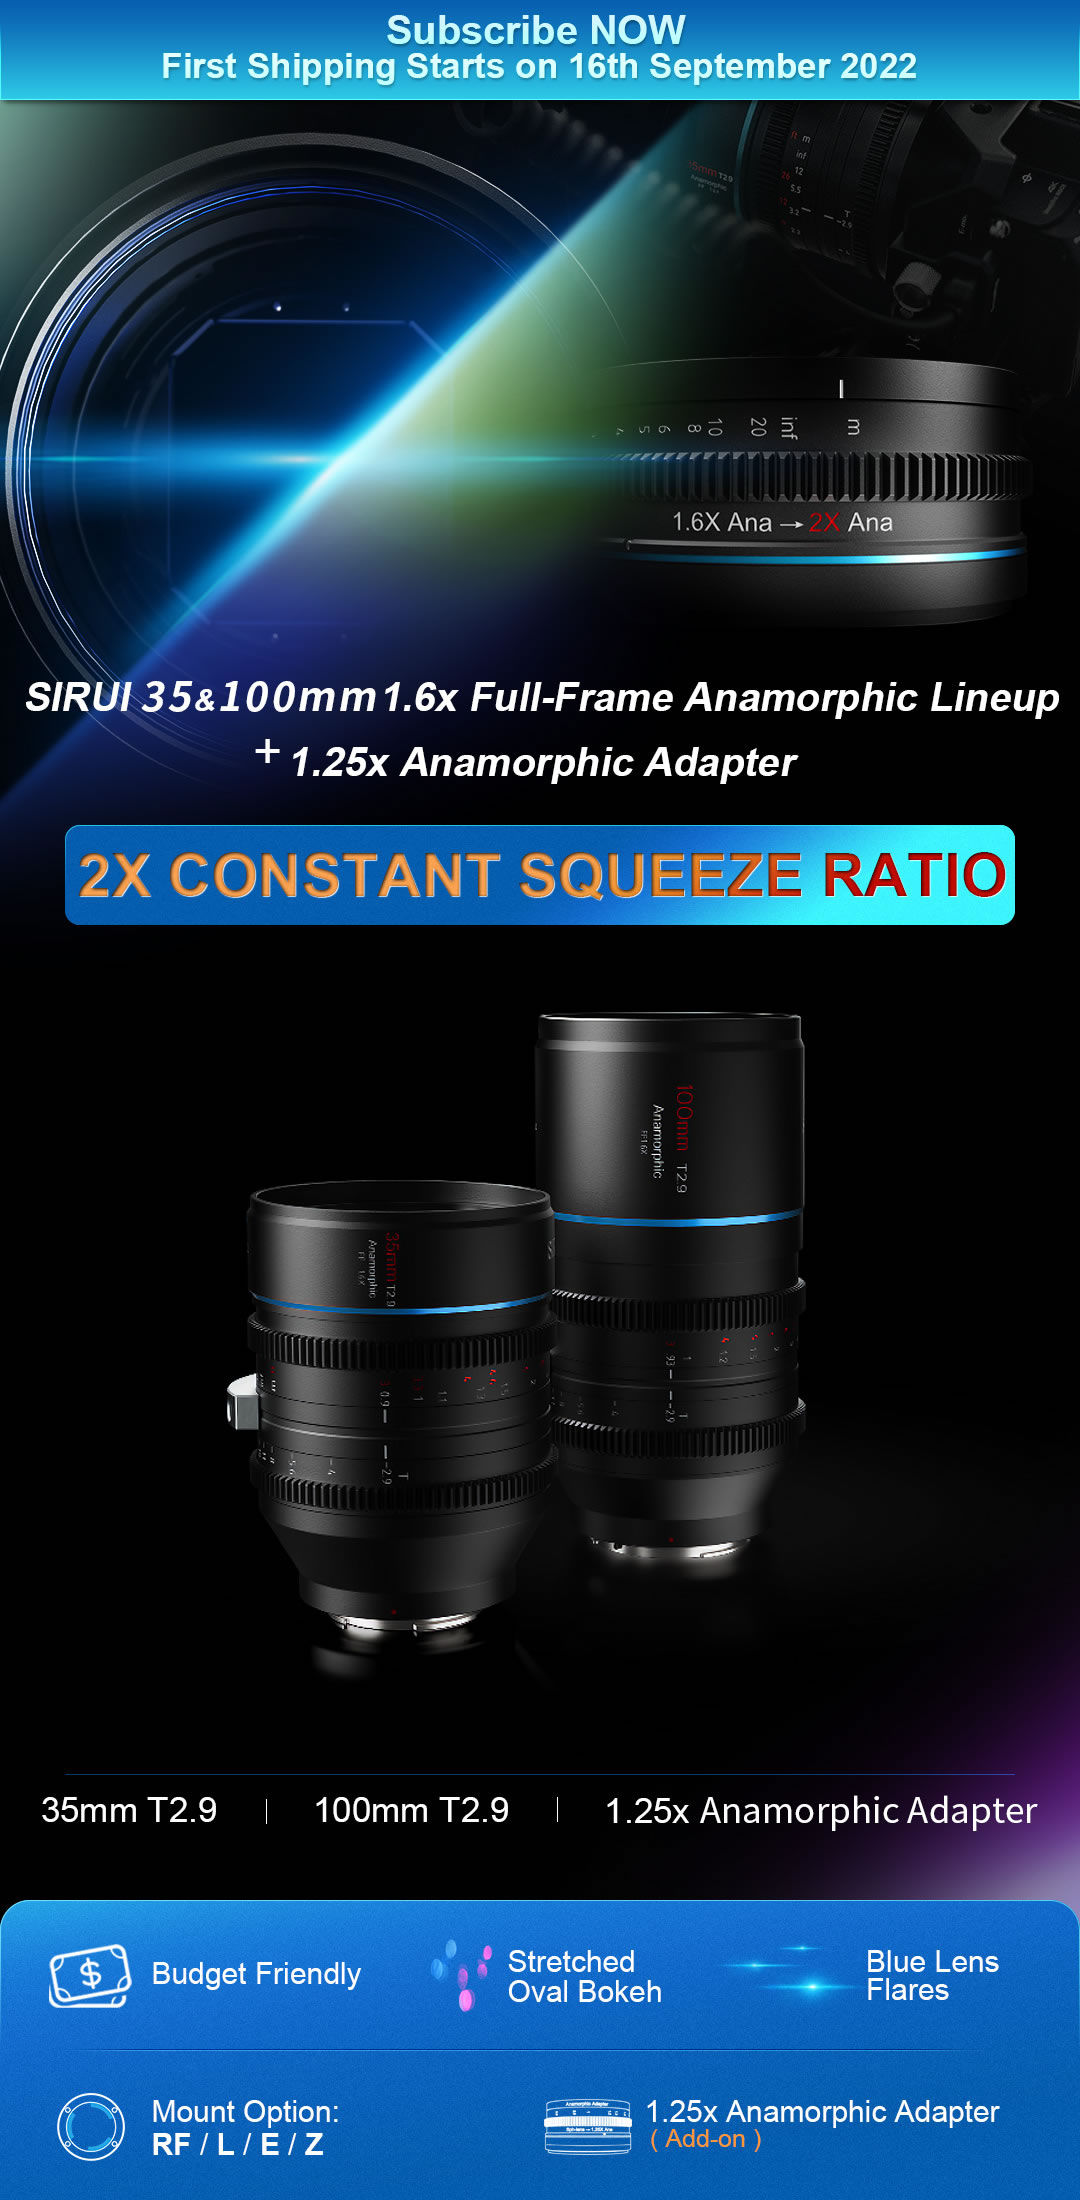 SIRUI 1.6x Full-Frame Anamorphic Lineup And SIRUI Anamorphic Adapter